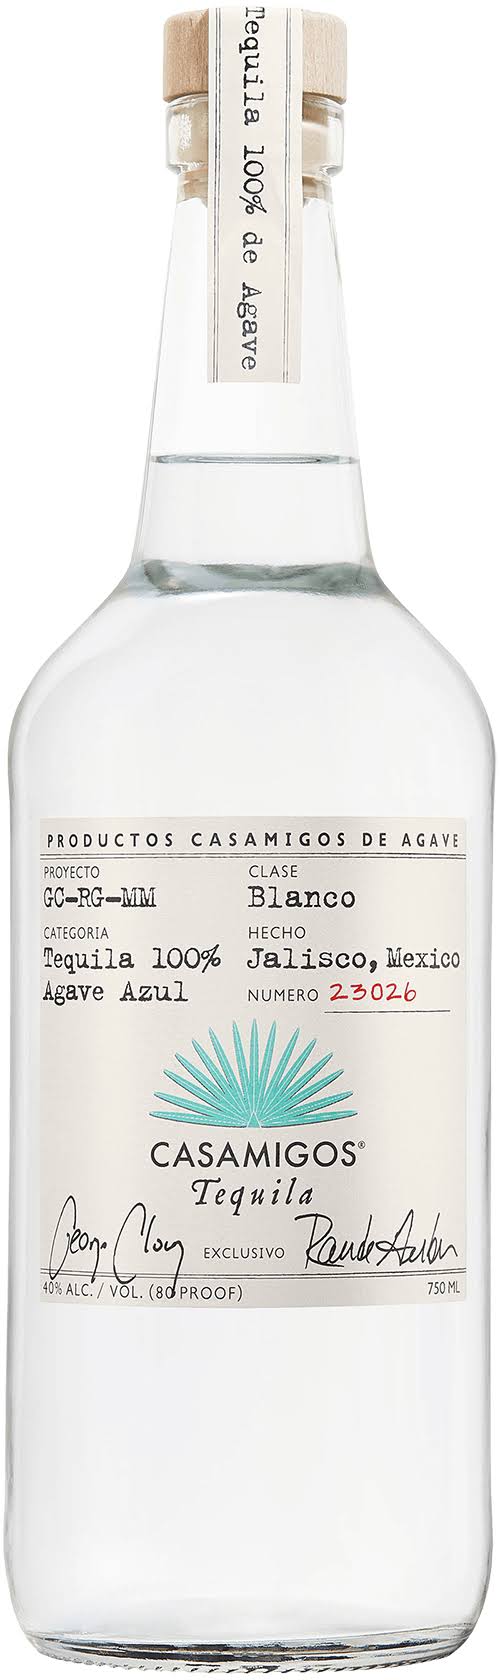 Casamigos Blanco Tequila 750ml